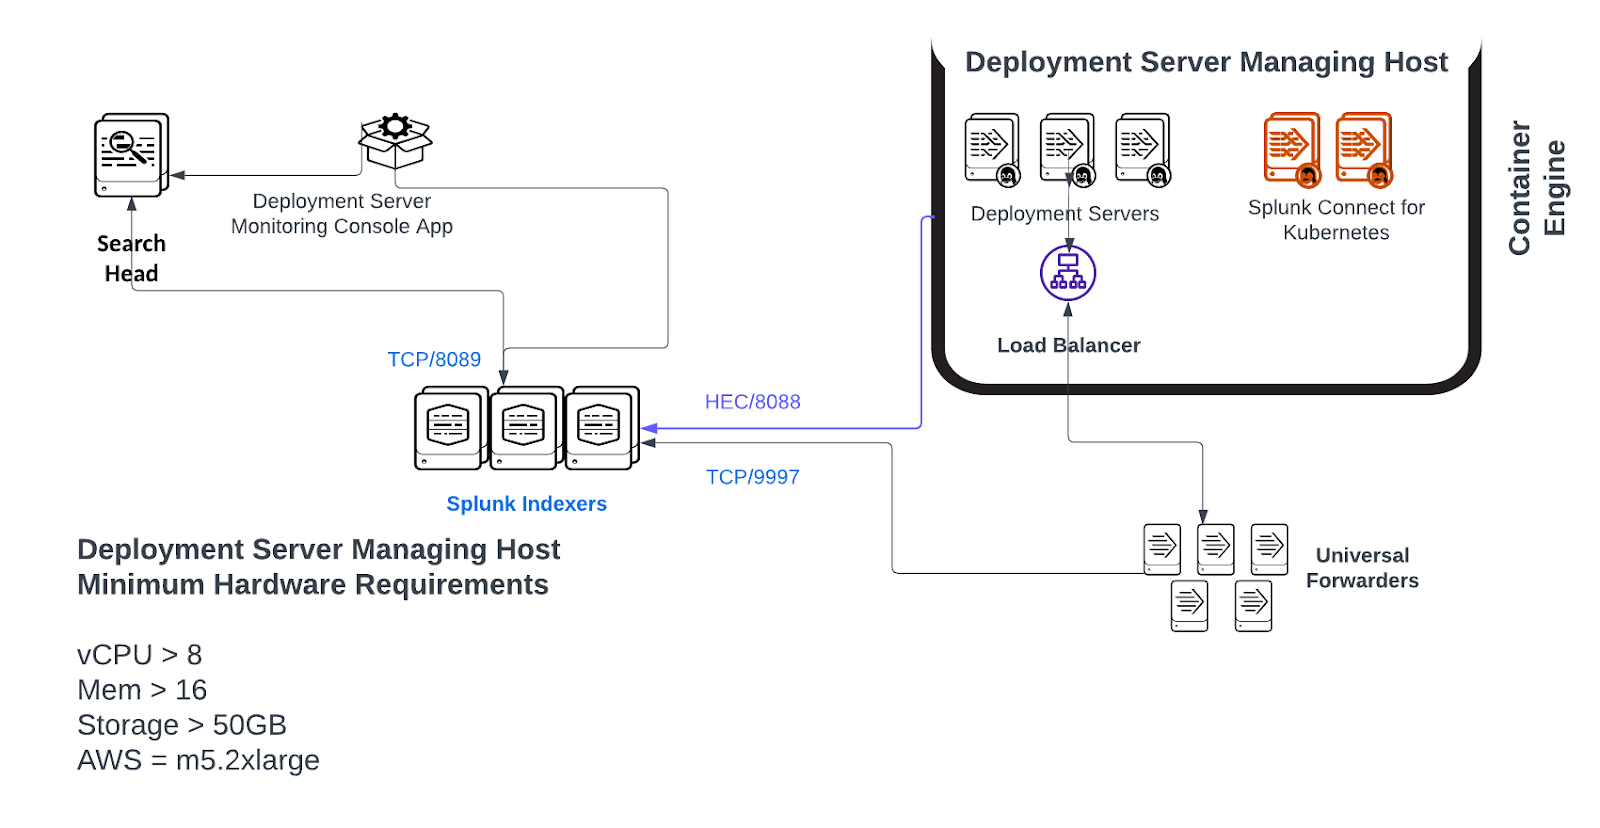 Splunk Distributed Deployment Server - Overview